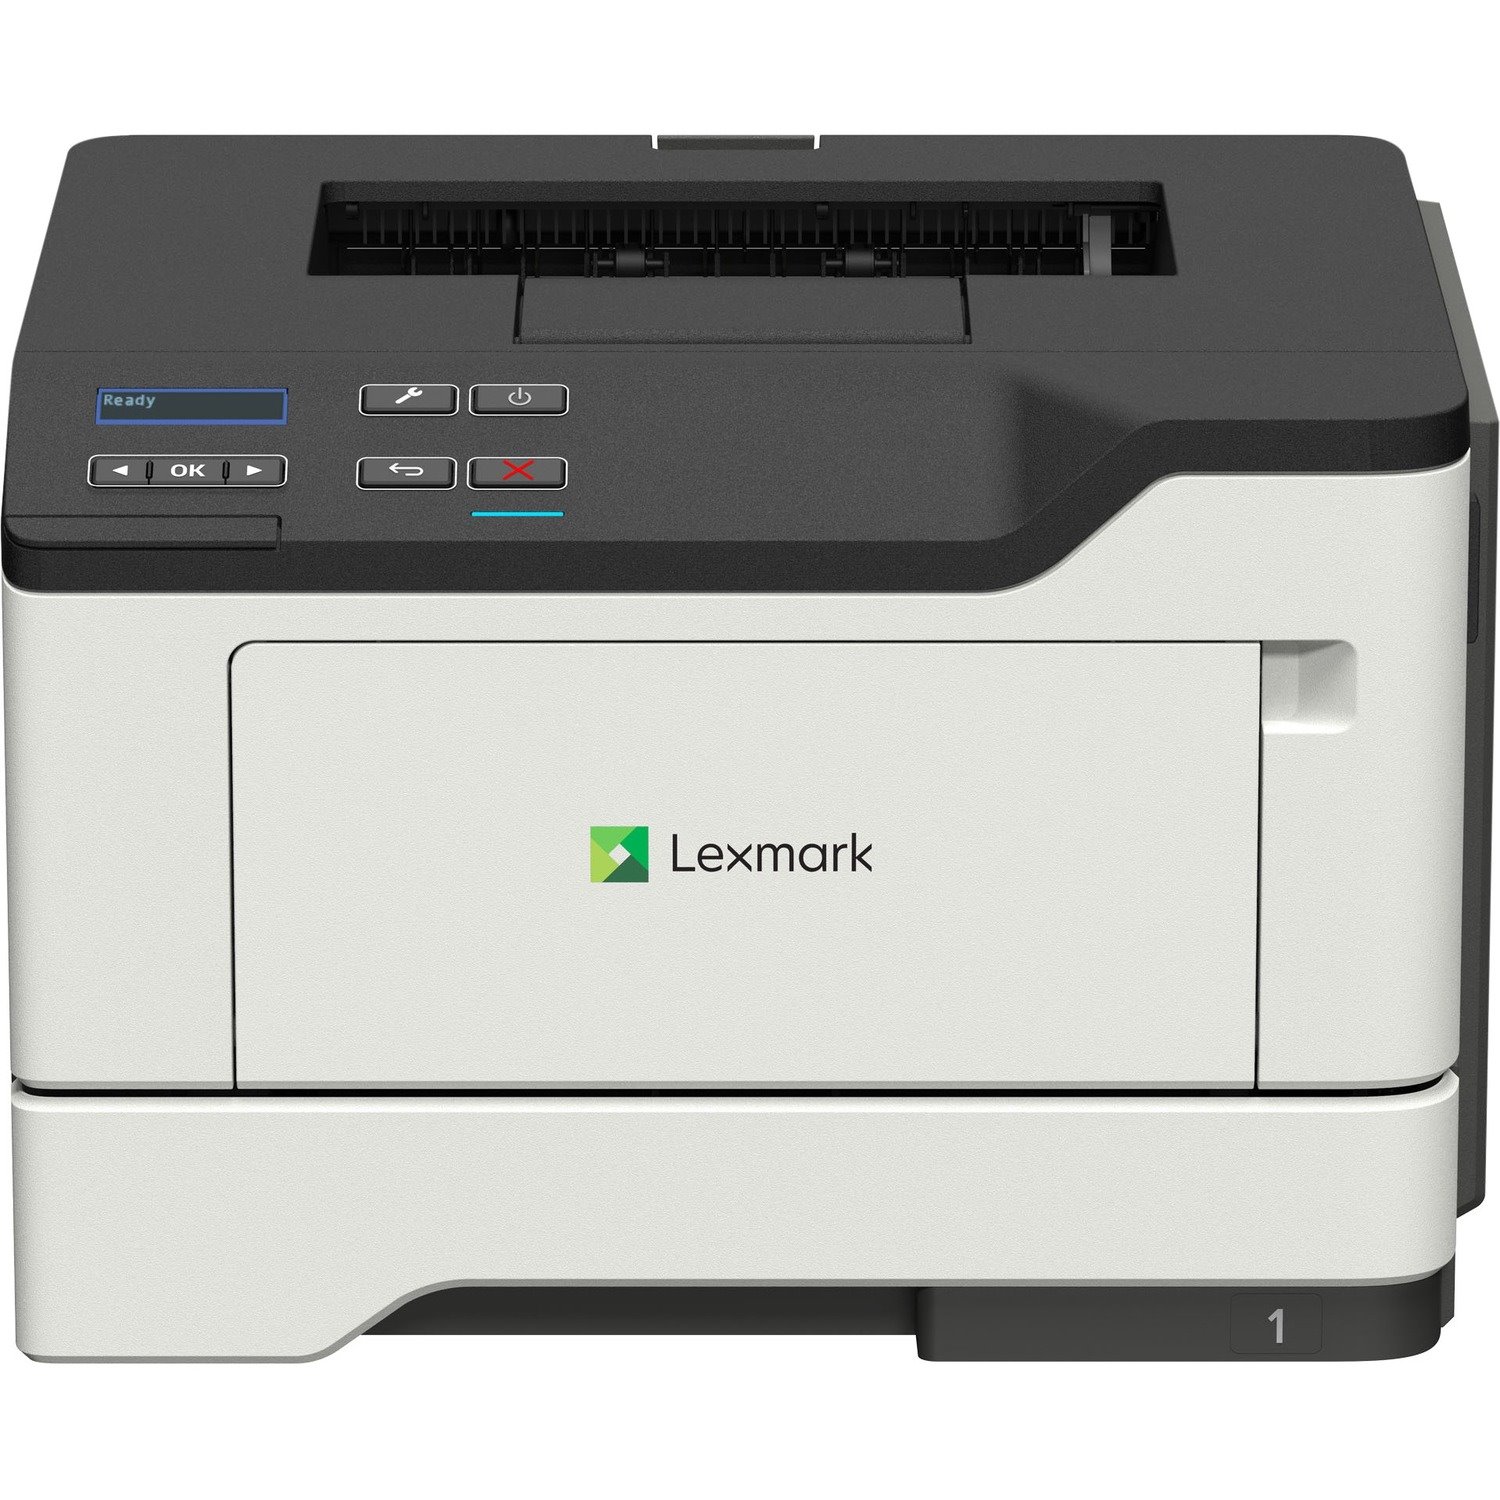 Lexmark MS420 MS421dn Desktop Laser Printer - Monochrome - TAA Compliant